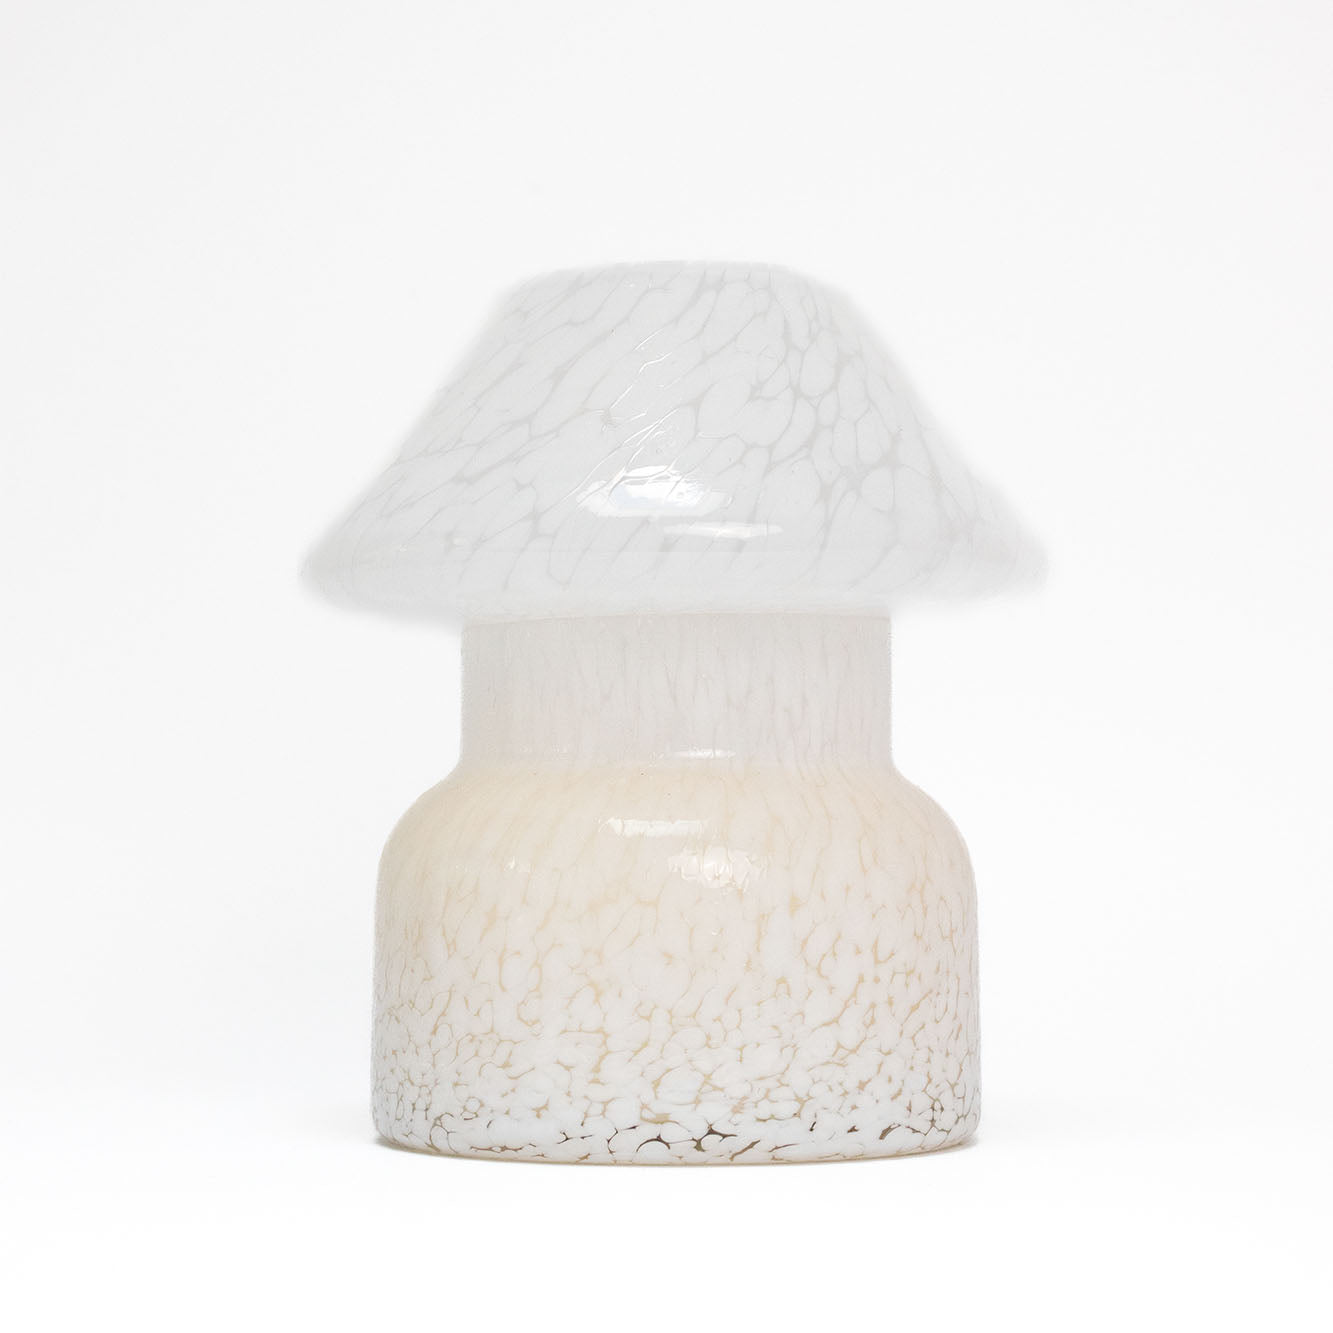 White Mushroom Candle Lamp